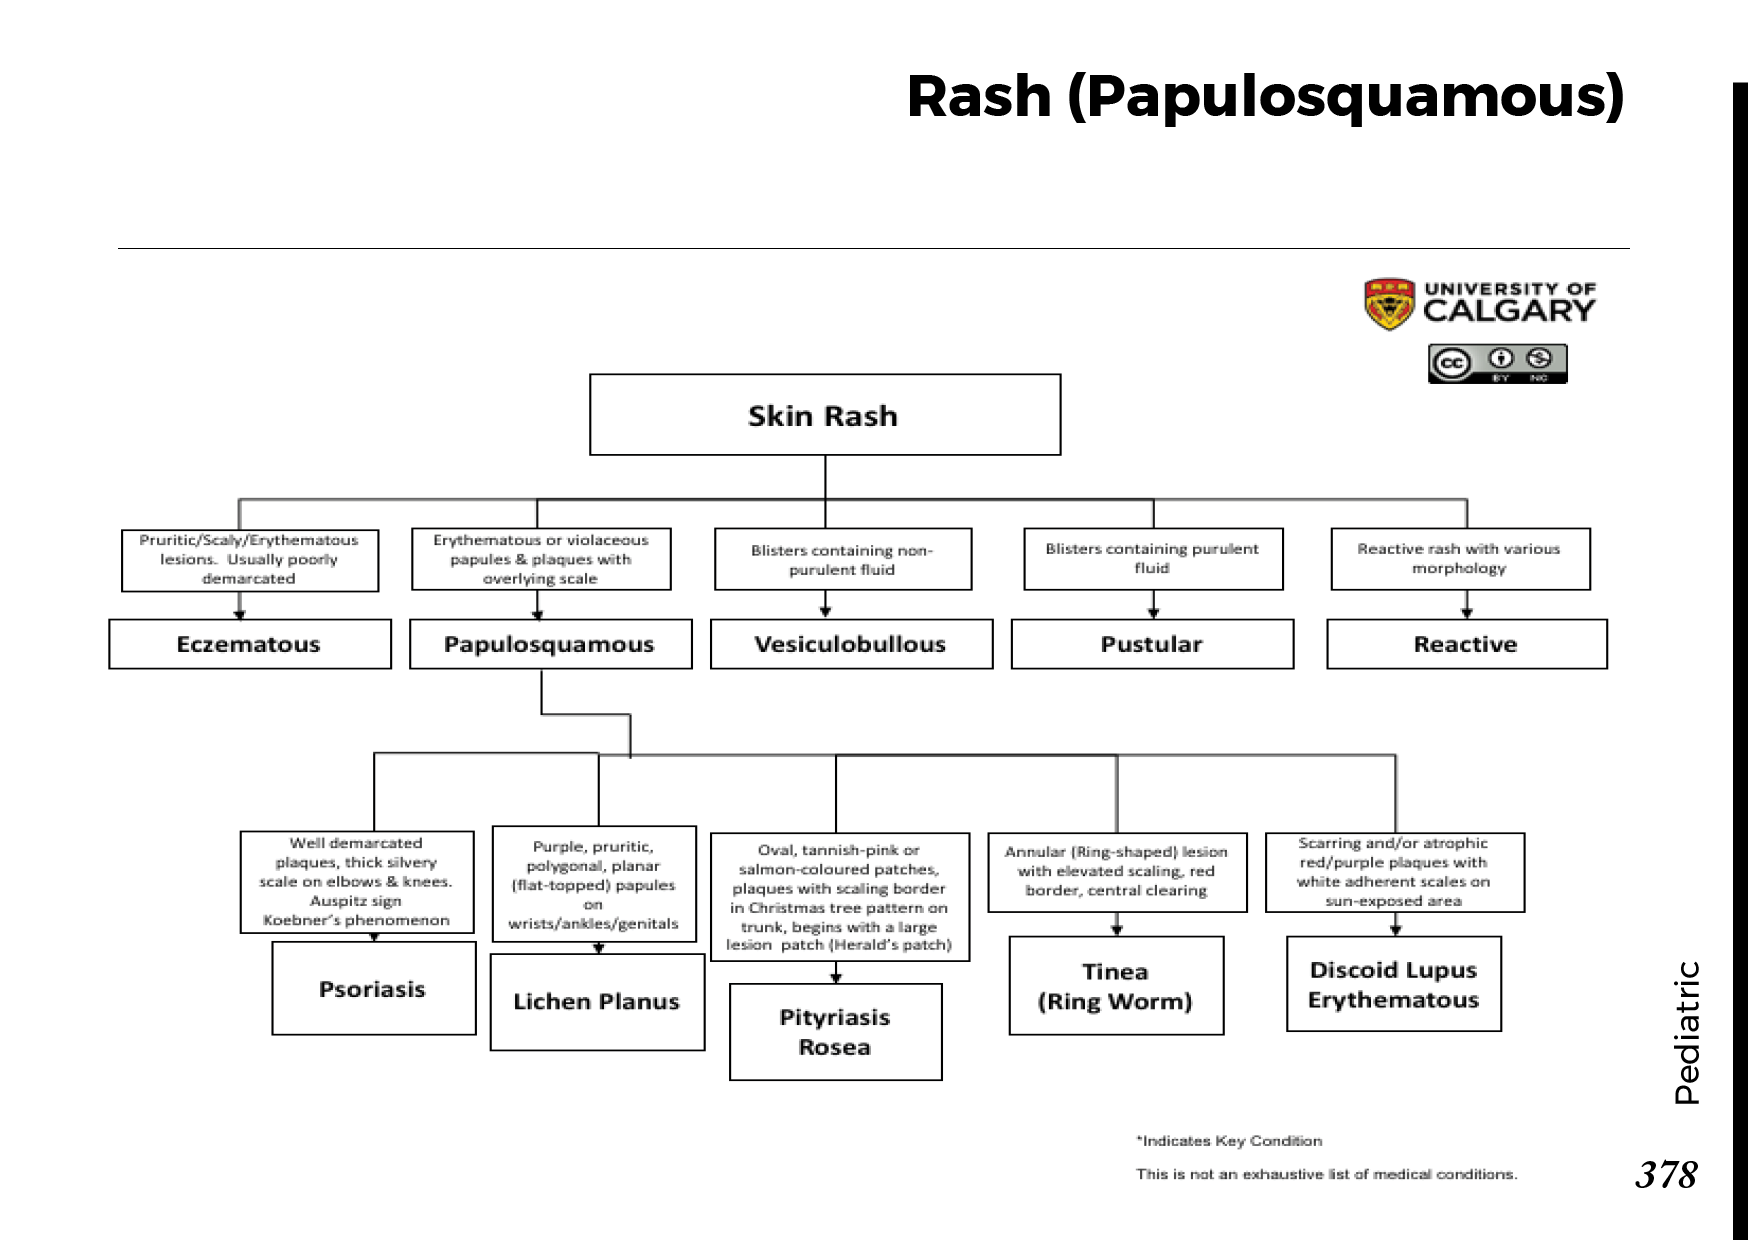 RASH (PAPULOSQUAMOUS) Scheme